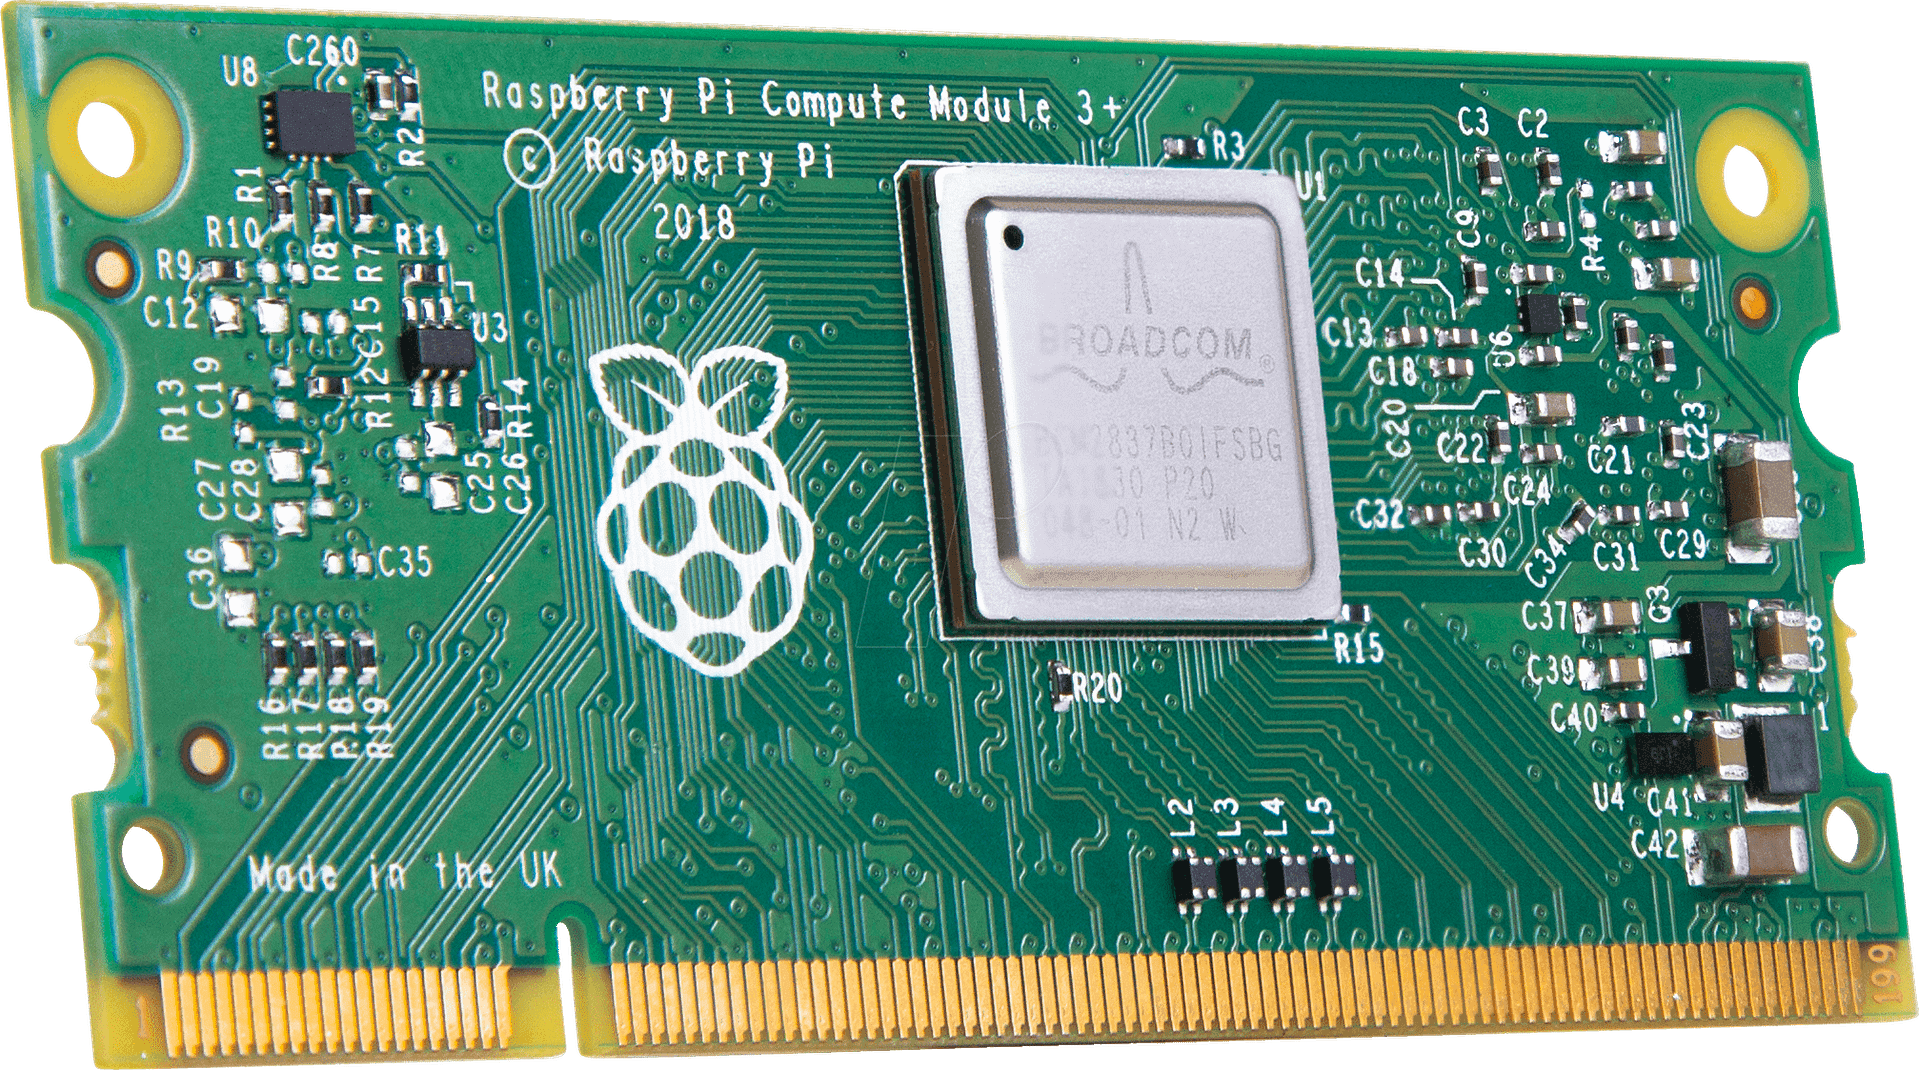  Latest Raspberry Pi Compute Module 3+